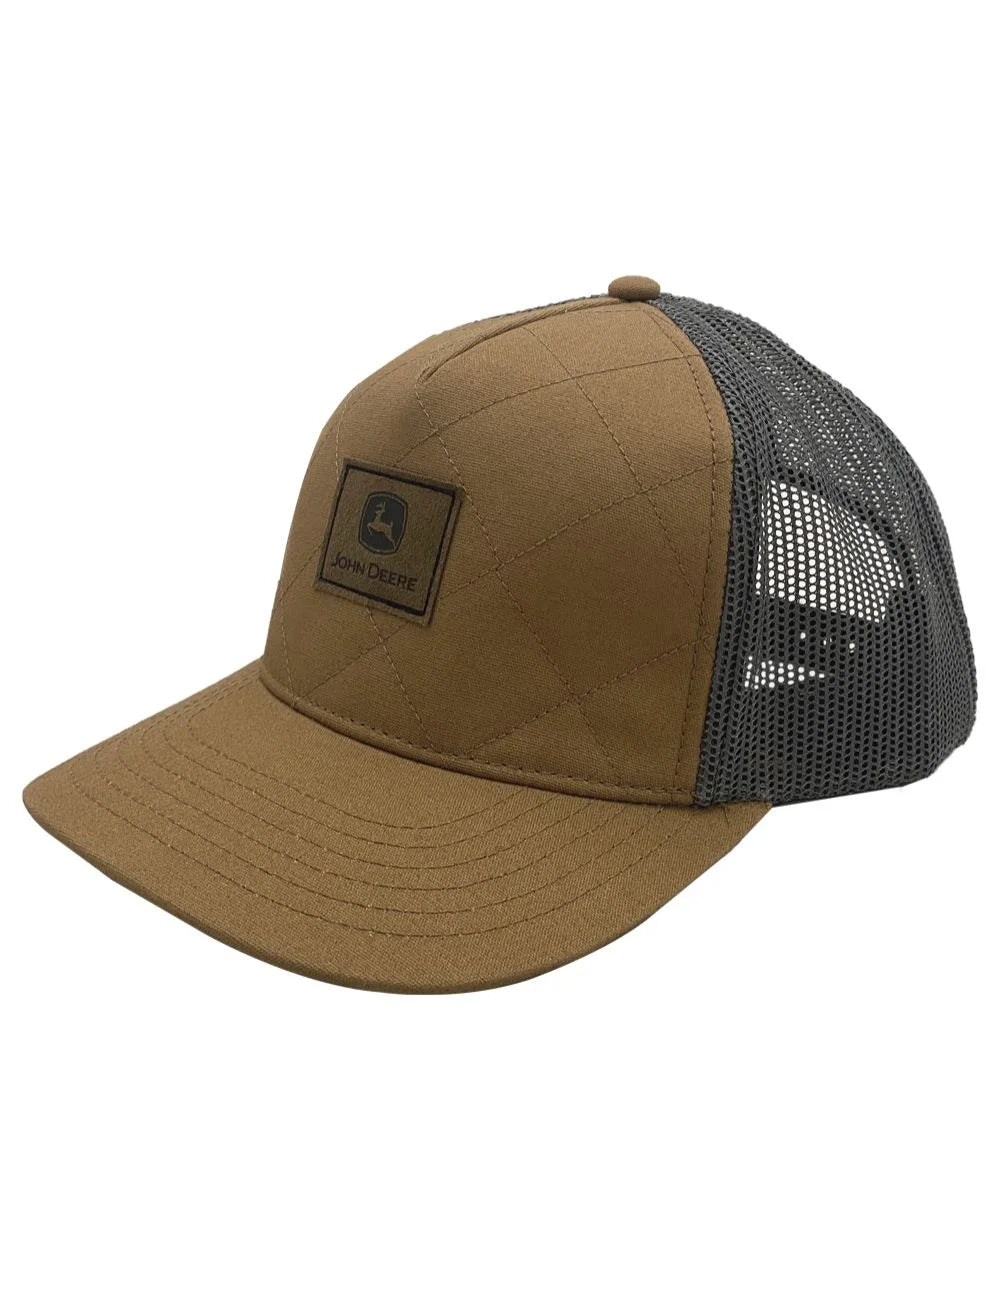 John Deere - Brown Leather Patch Cap